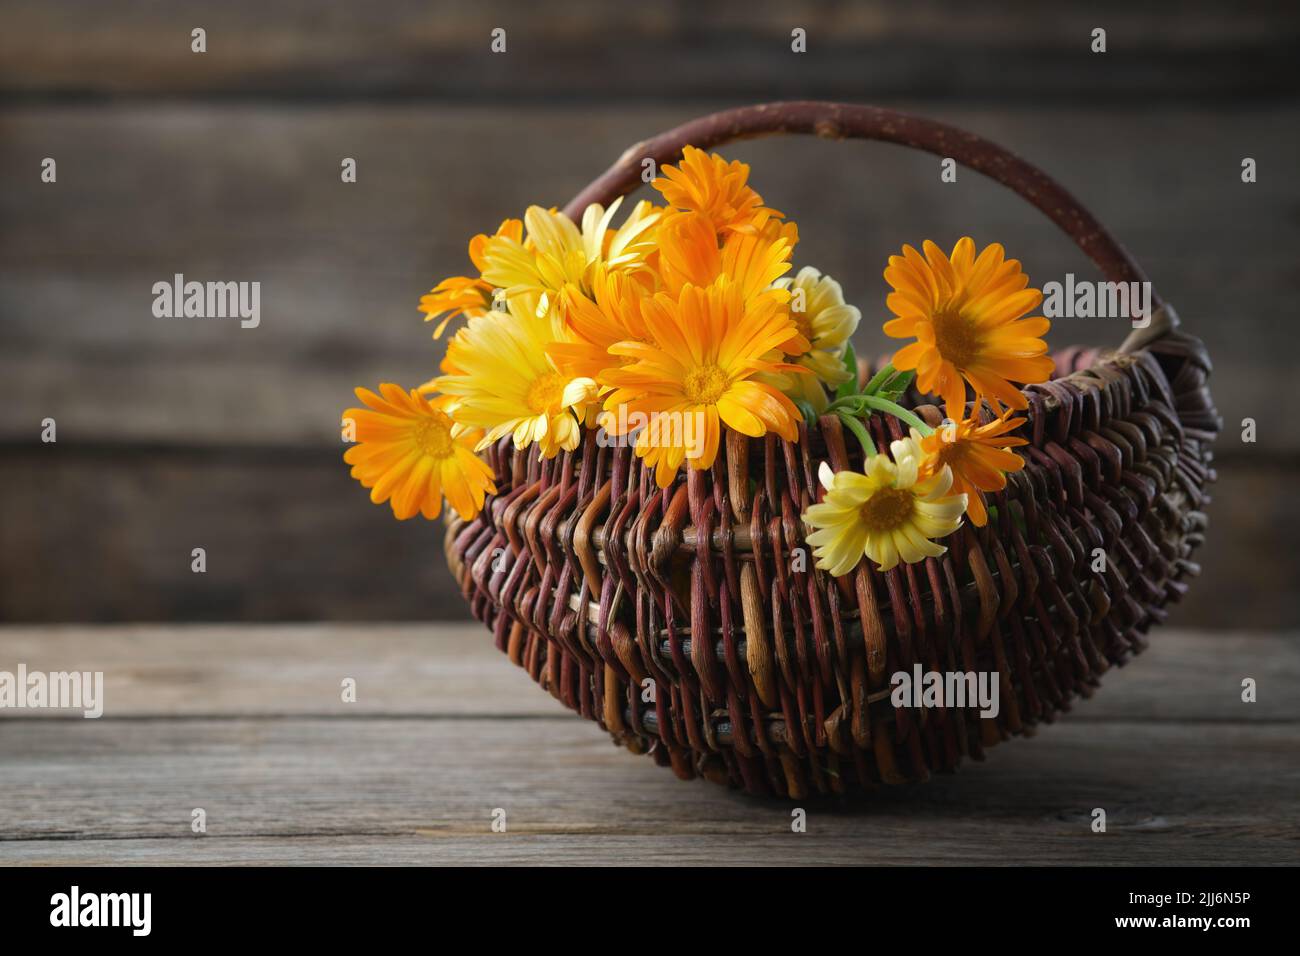 Basket of healthy fresh calendula medicinal herbs. Marigold flowers. Alternative herbal medicine. Stock Photo